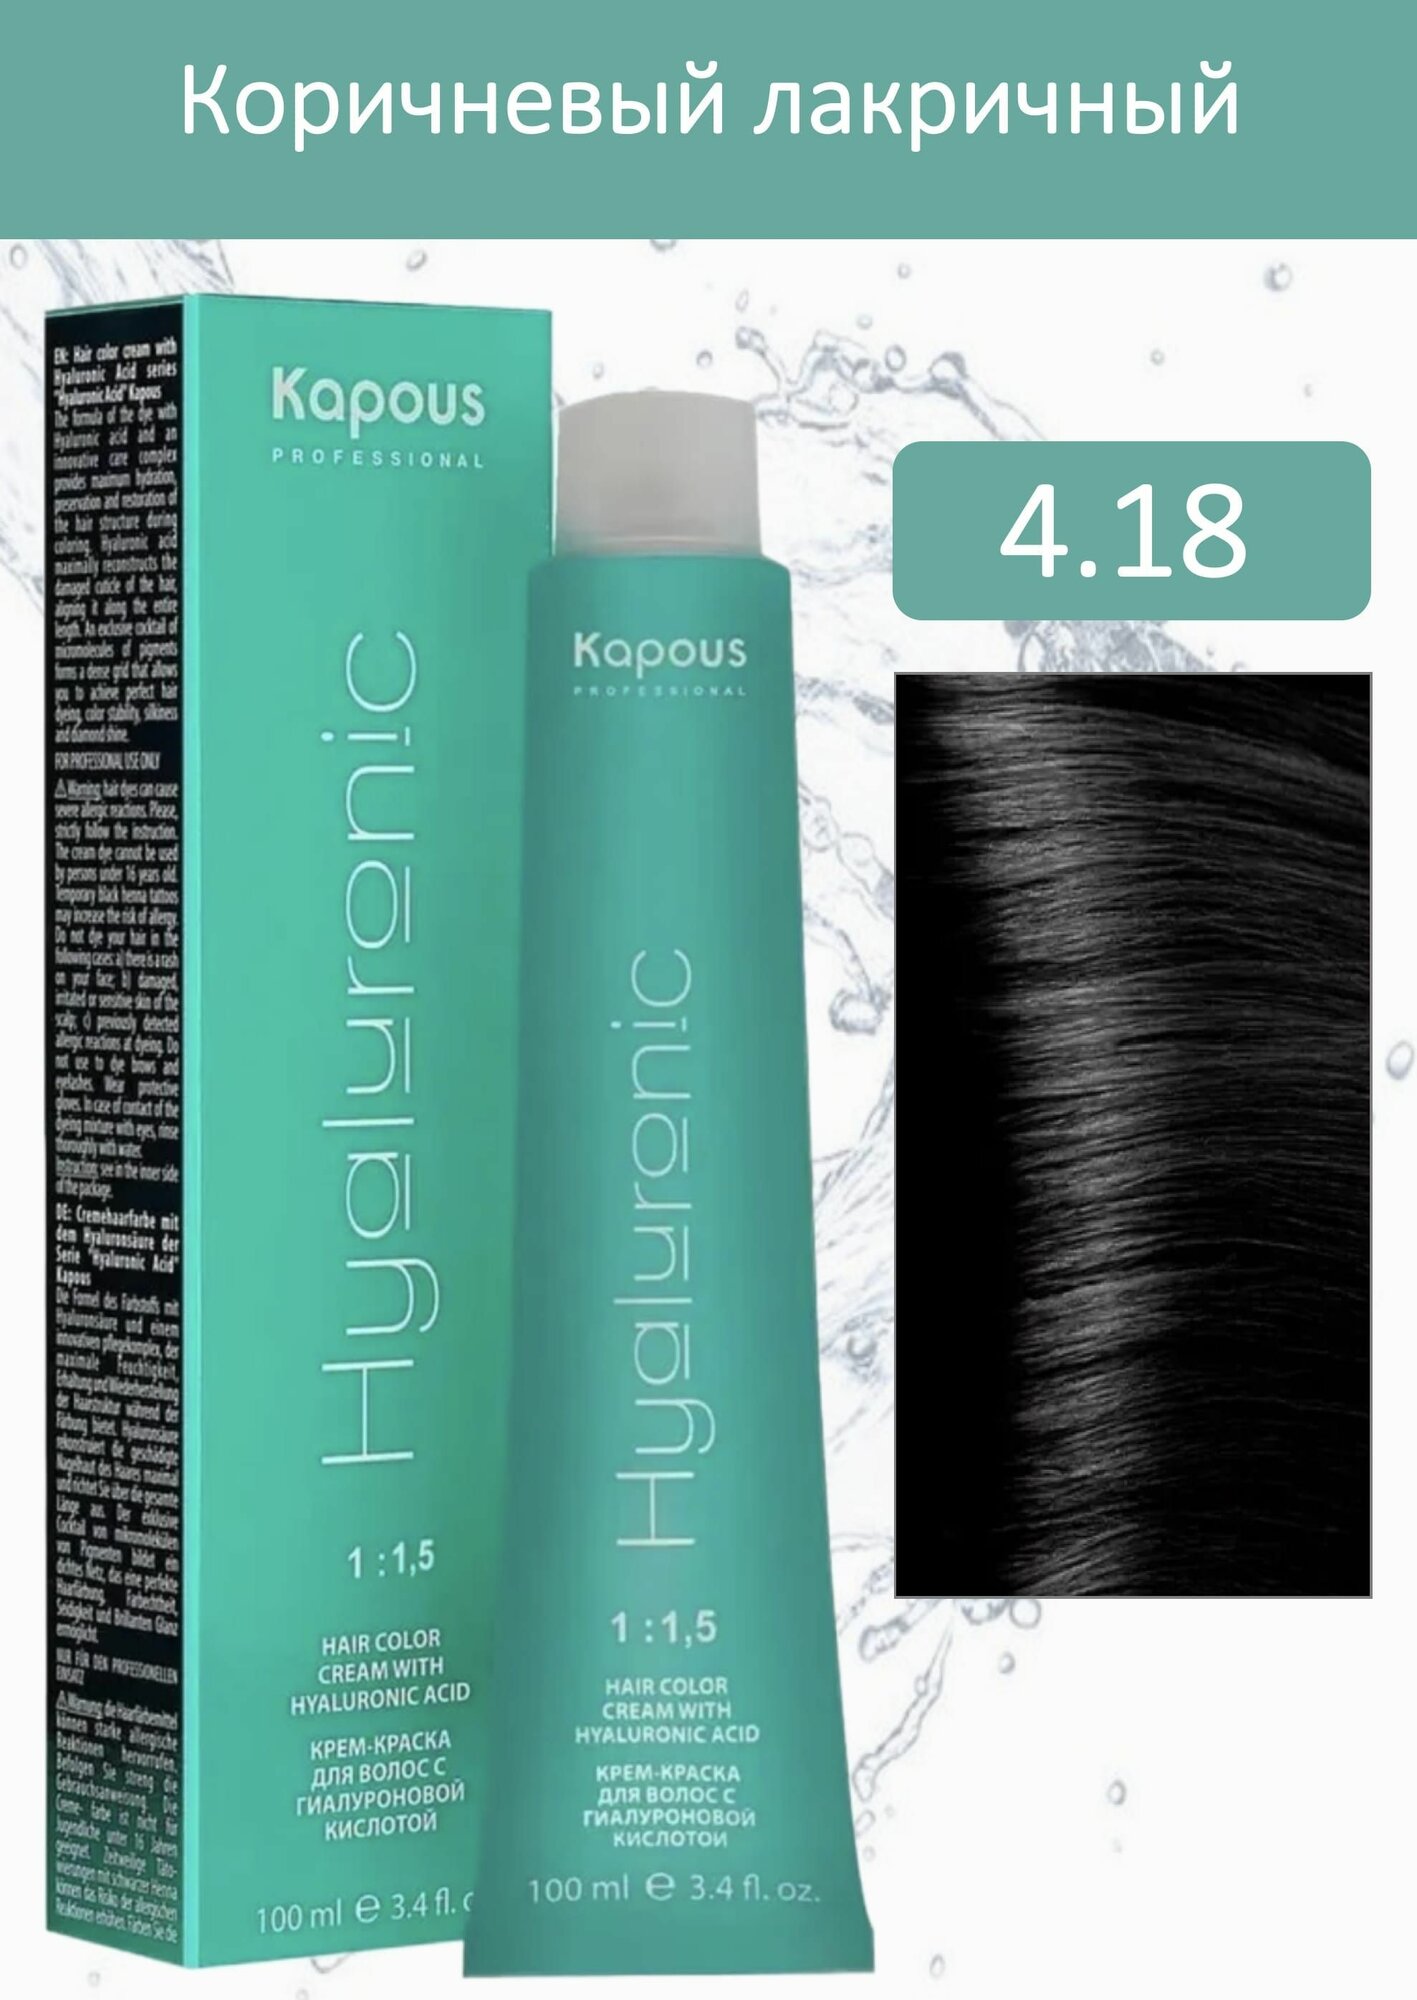 Kapous Professional Крем-краска Hyaluronic acid 4.18 коричневый лакричный 100мл